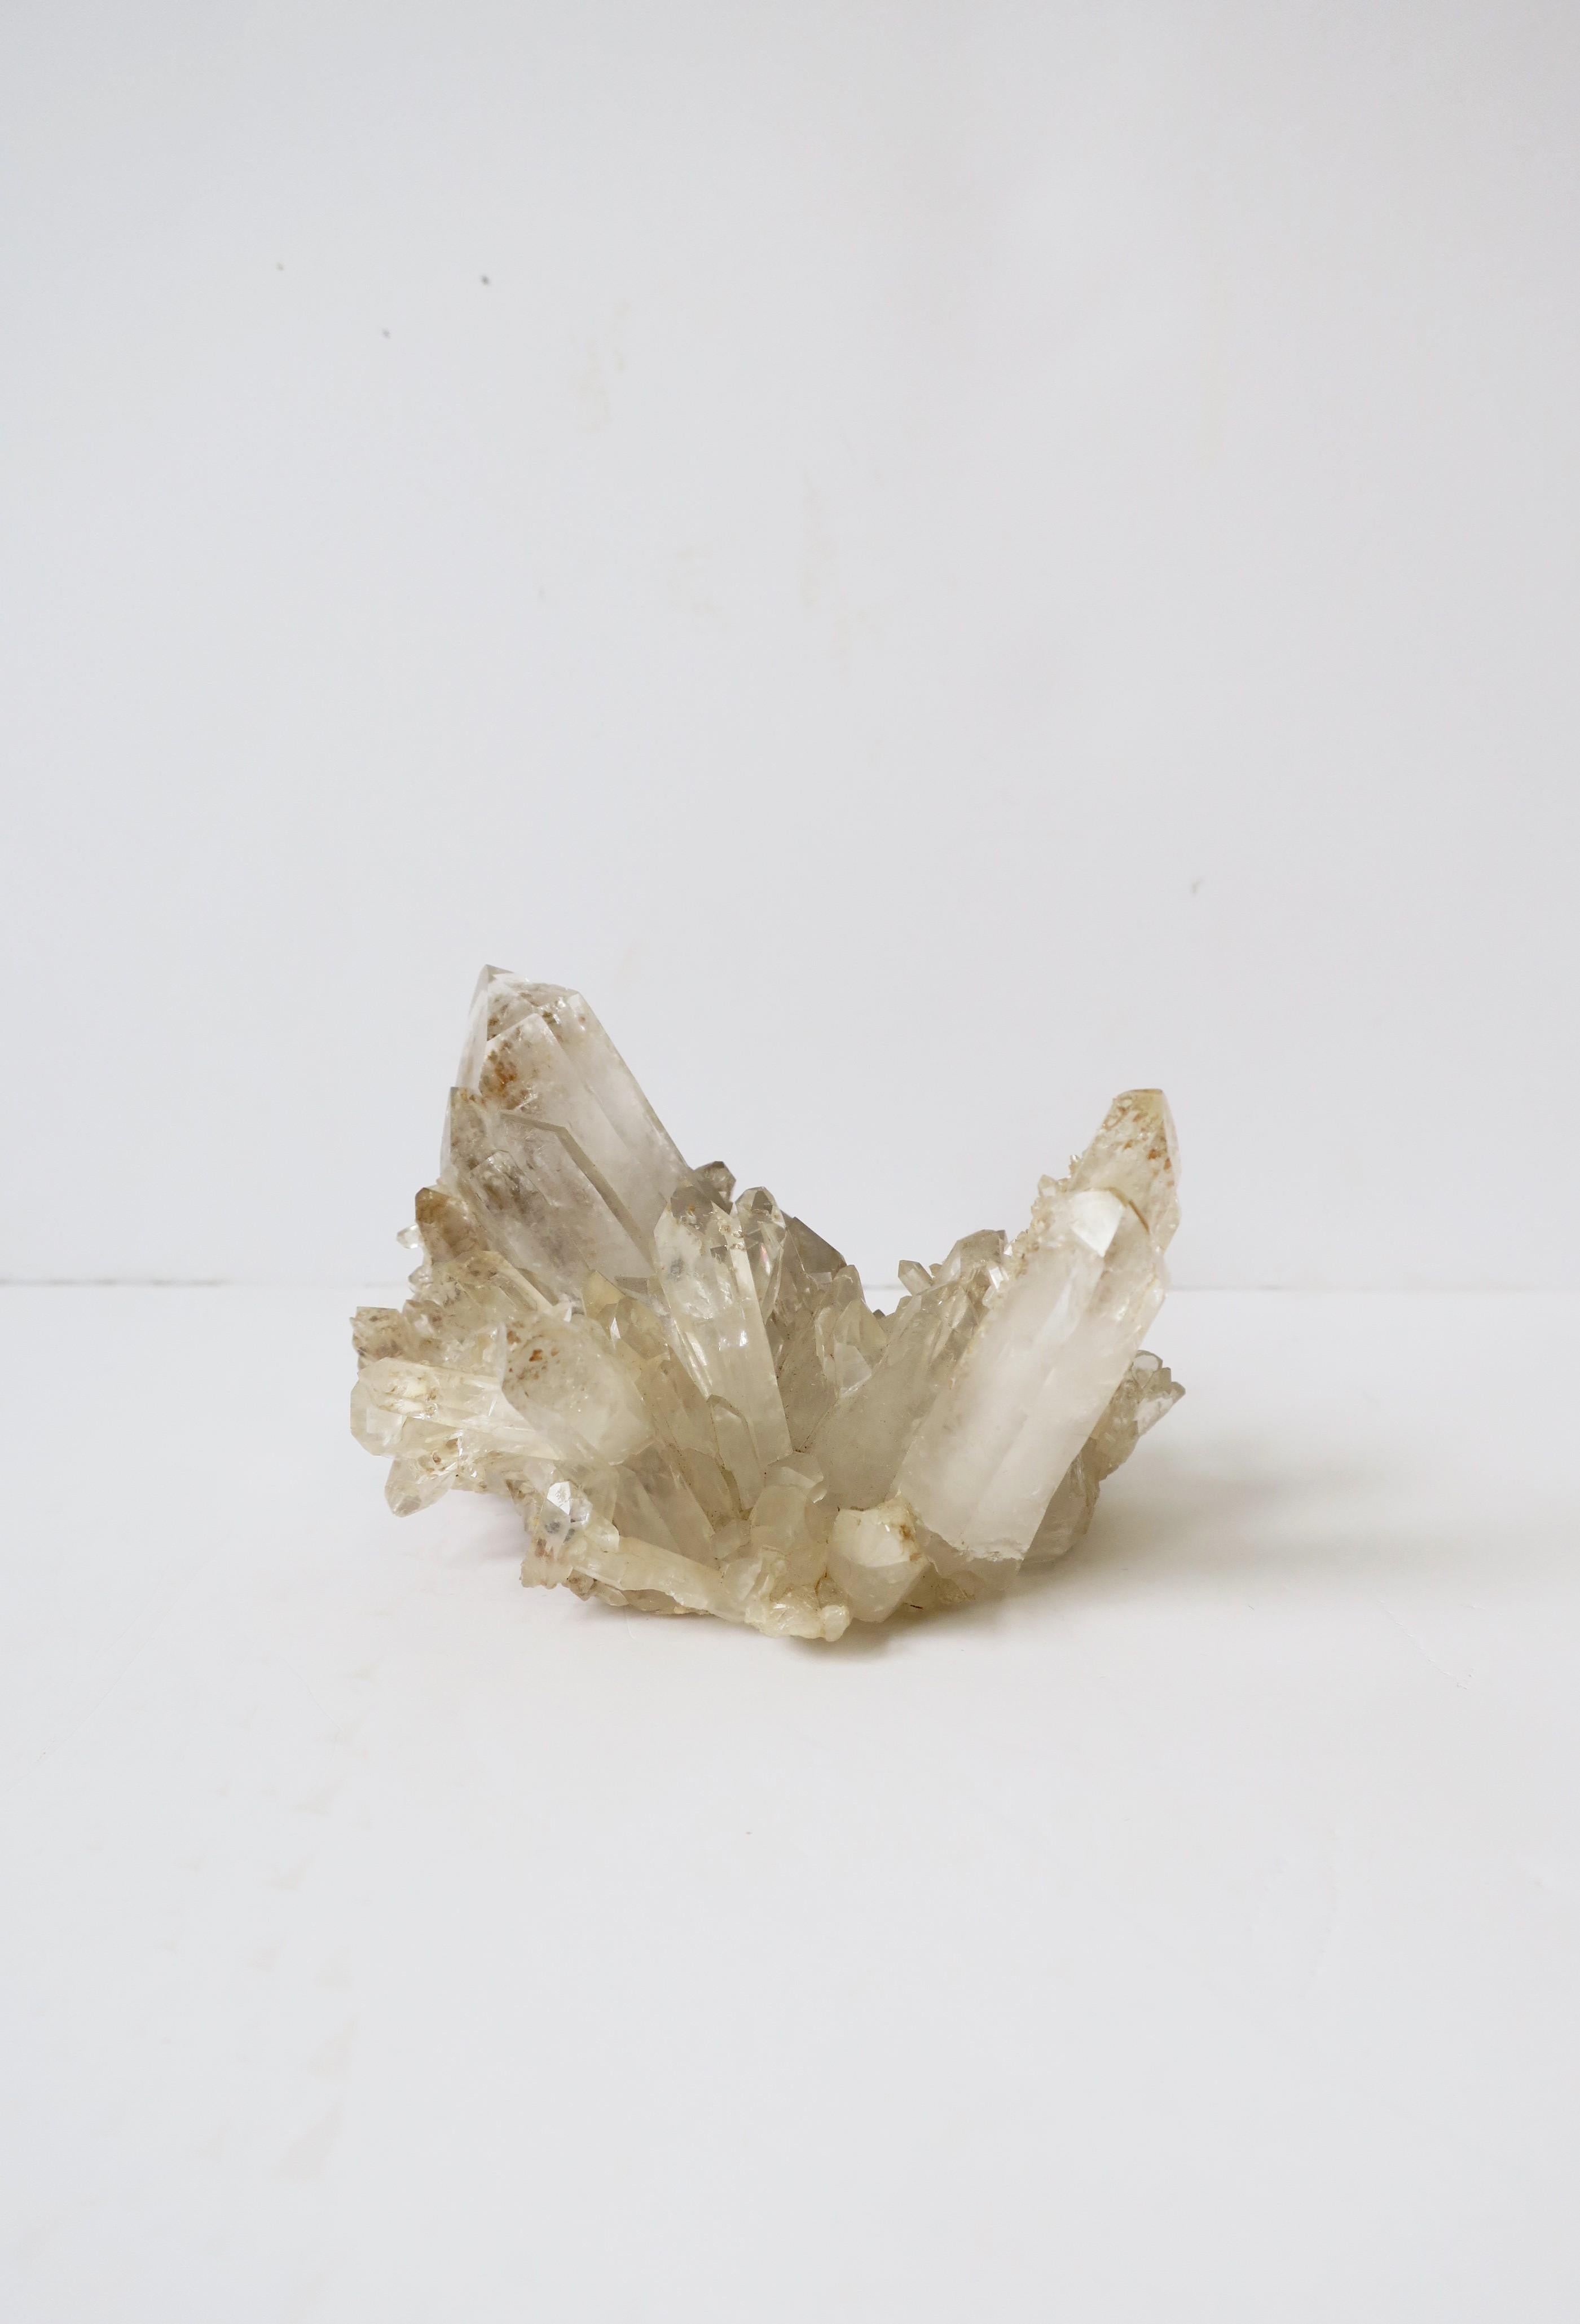 A rock crystal natural specimen piece aka clear quartz, decorative object. 

Dimensions: 3.5